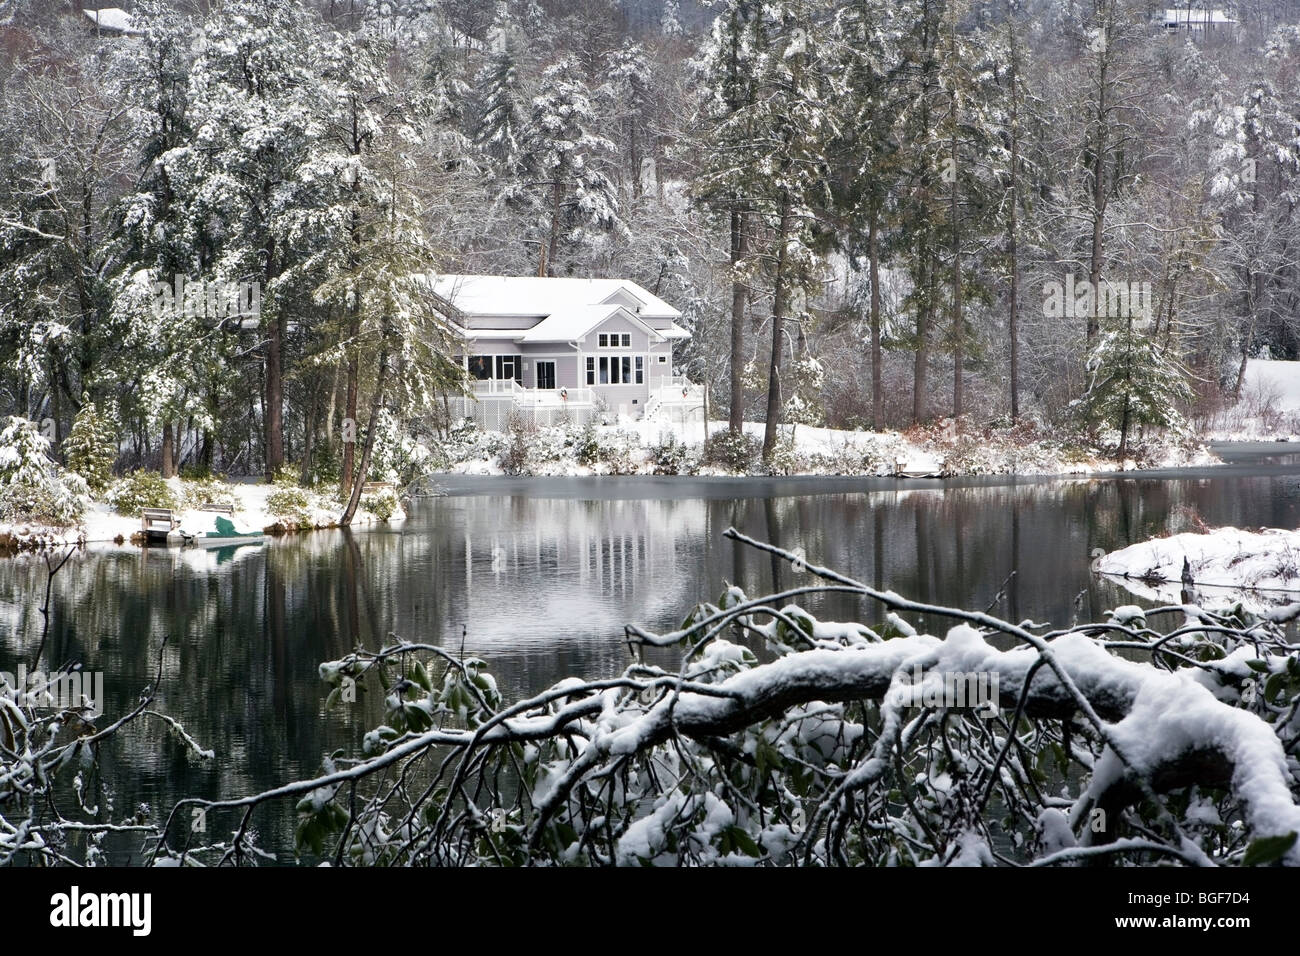 Maison vue du lac en hiver - Brevard, North Carolina USA Banque D'Images